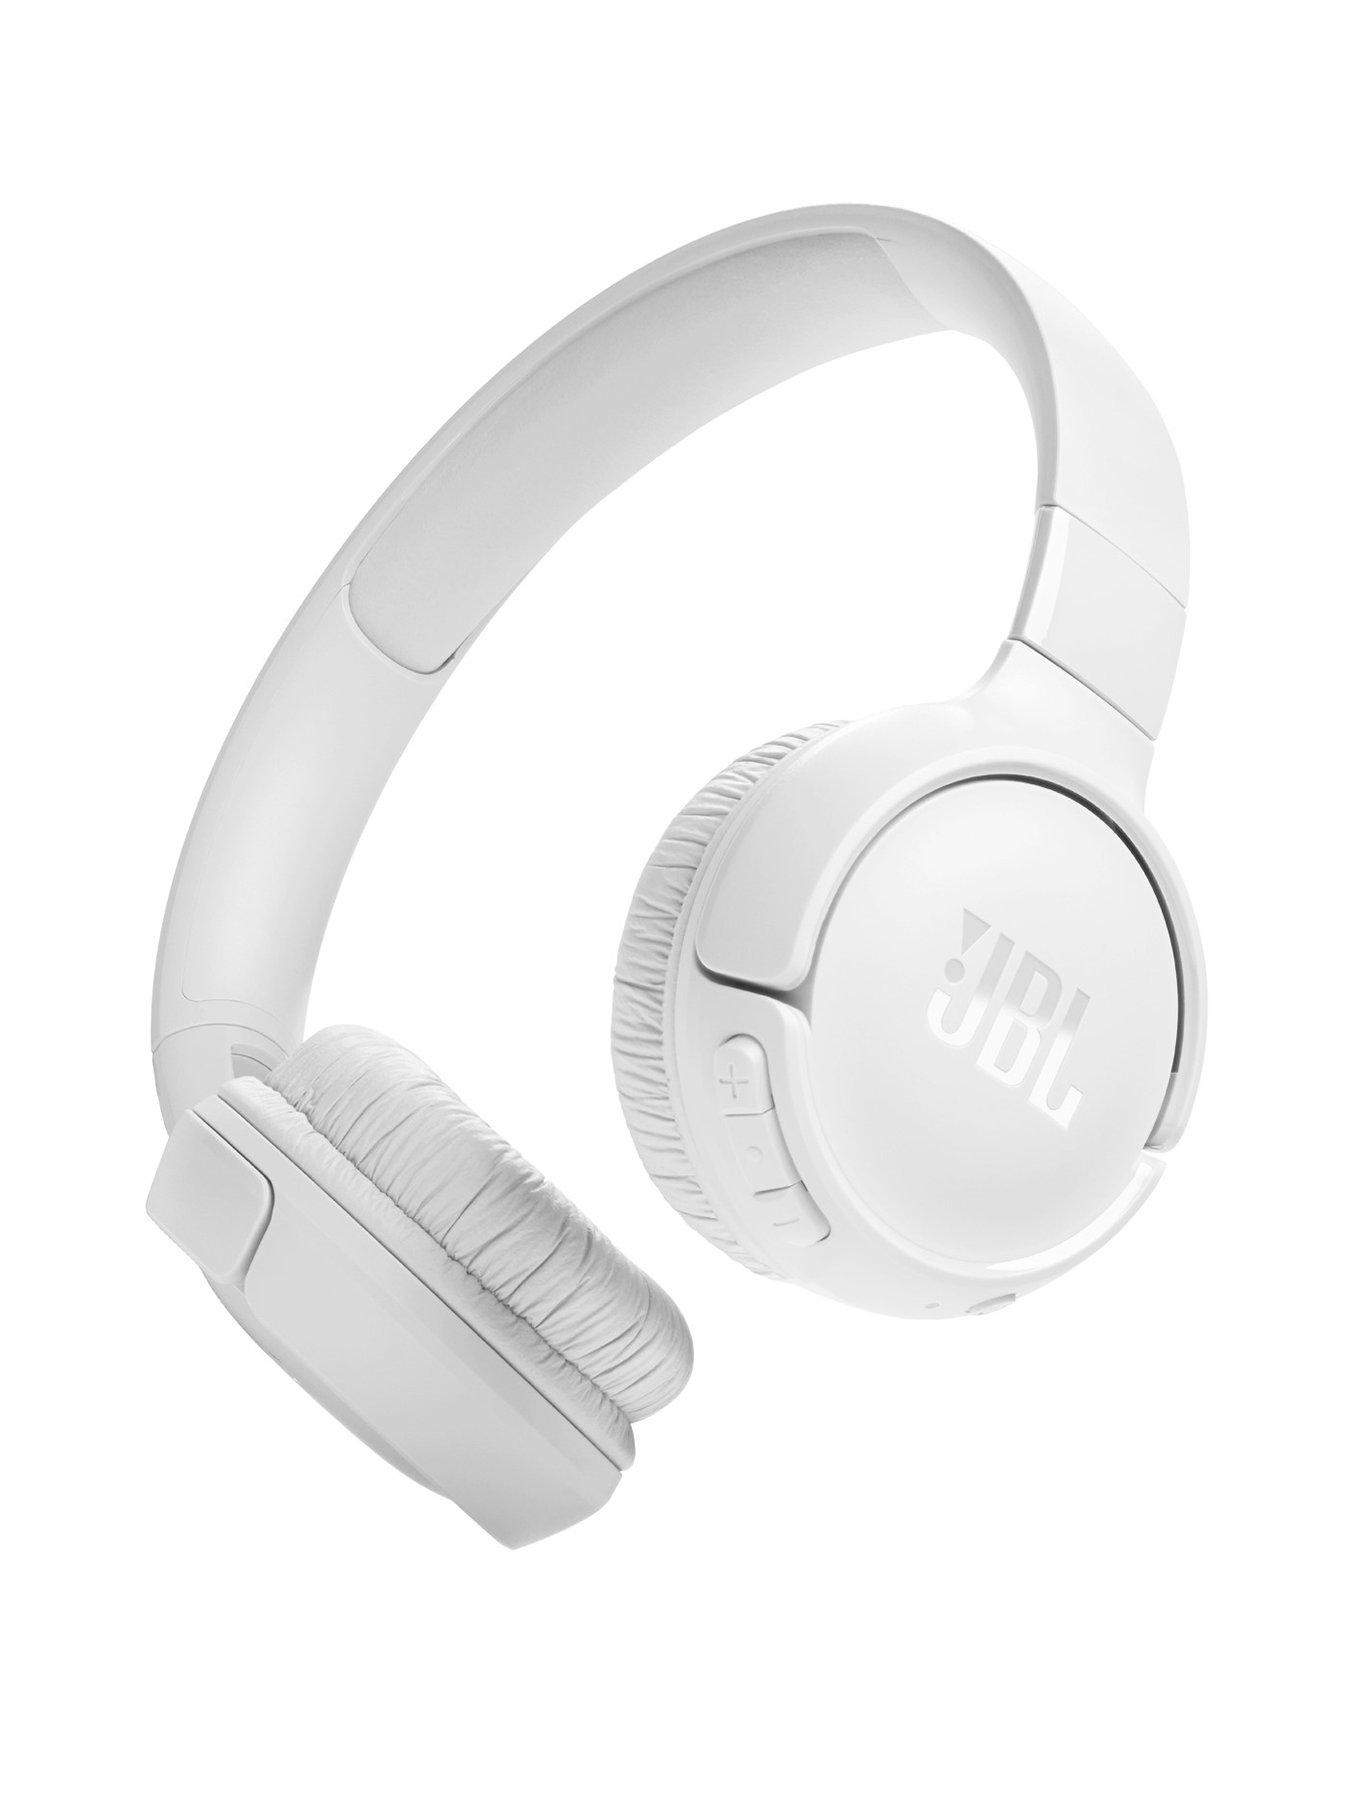 JVC Bluetooth Headphones, Wireless, Sweat Proof IPX2, Pivot Fit - Pink